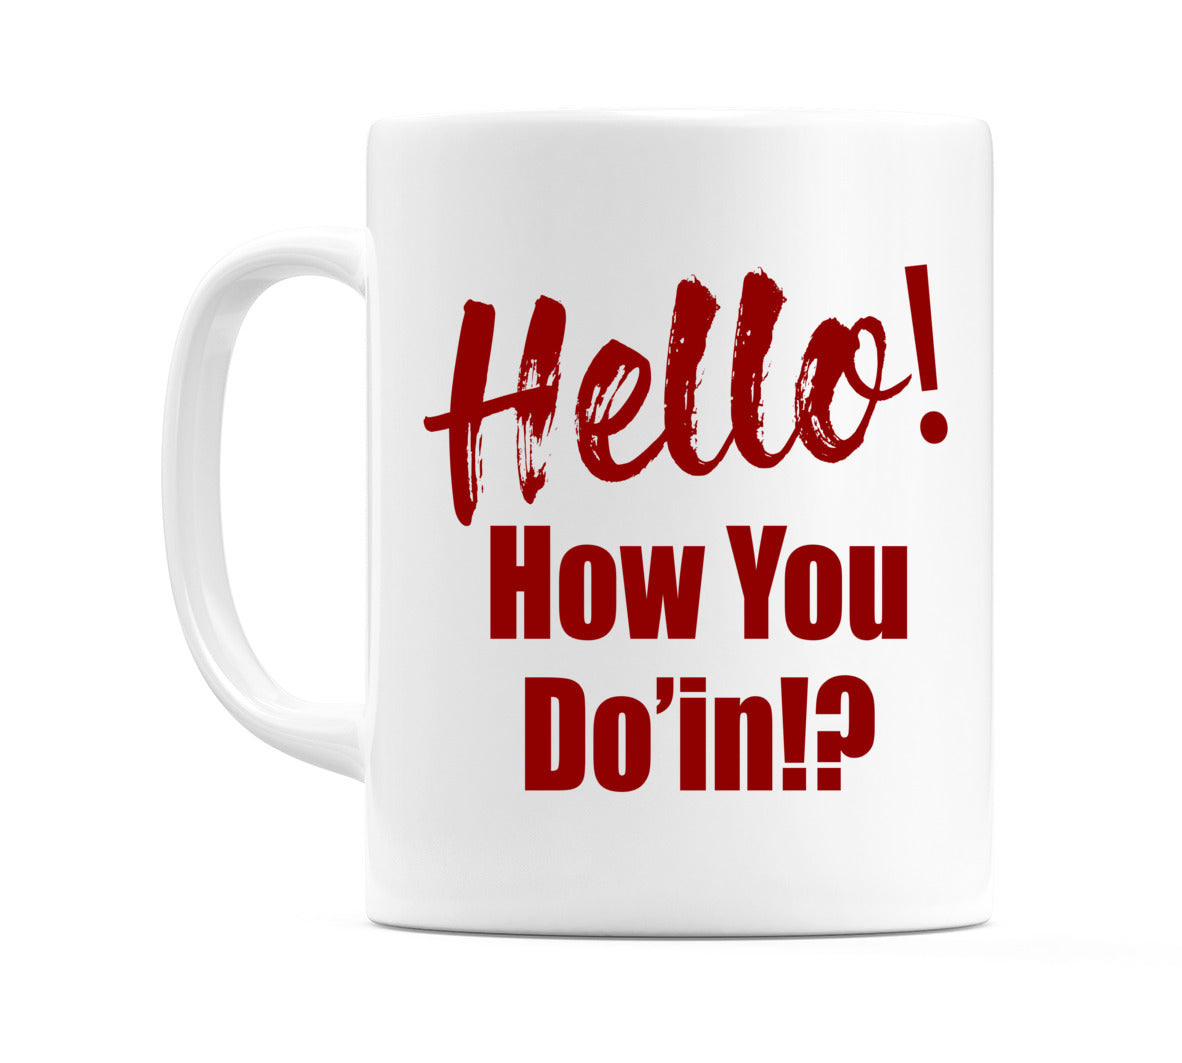 Hello! How You Do' in!? Mug